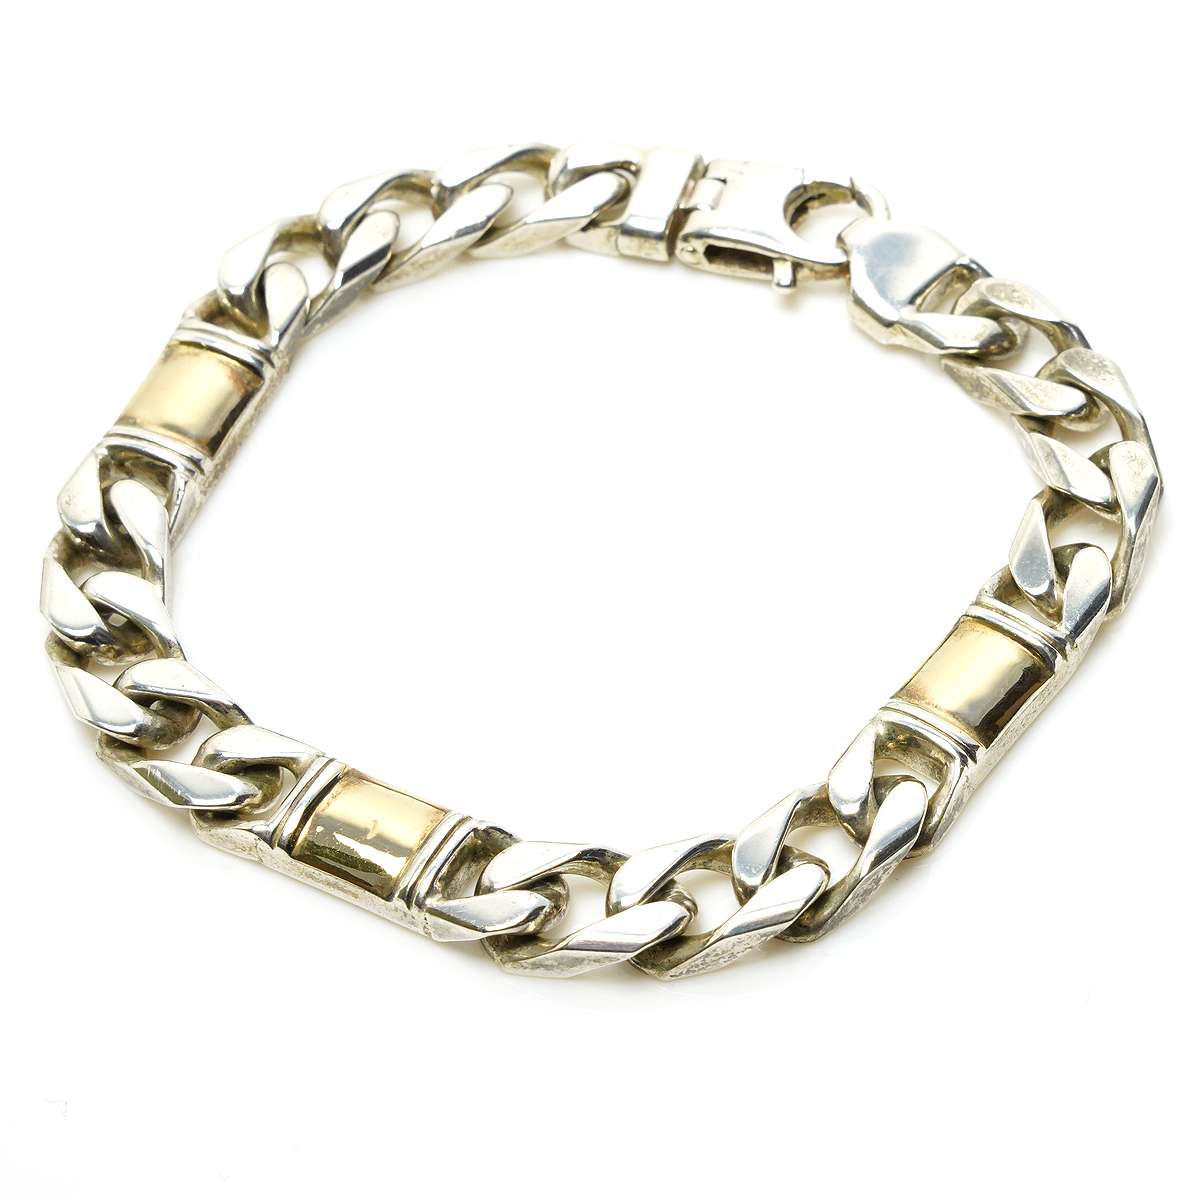  Star Jewelry K18 925 комбинированный плоский цепь браслет женский STAR JEWELRY